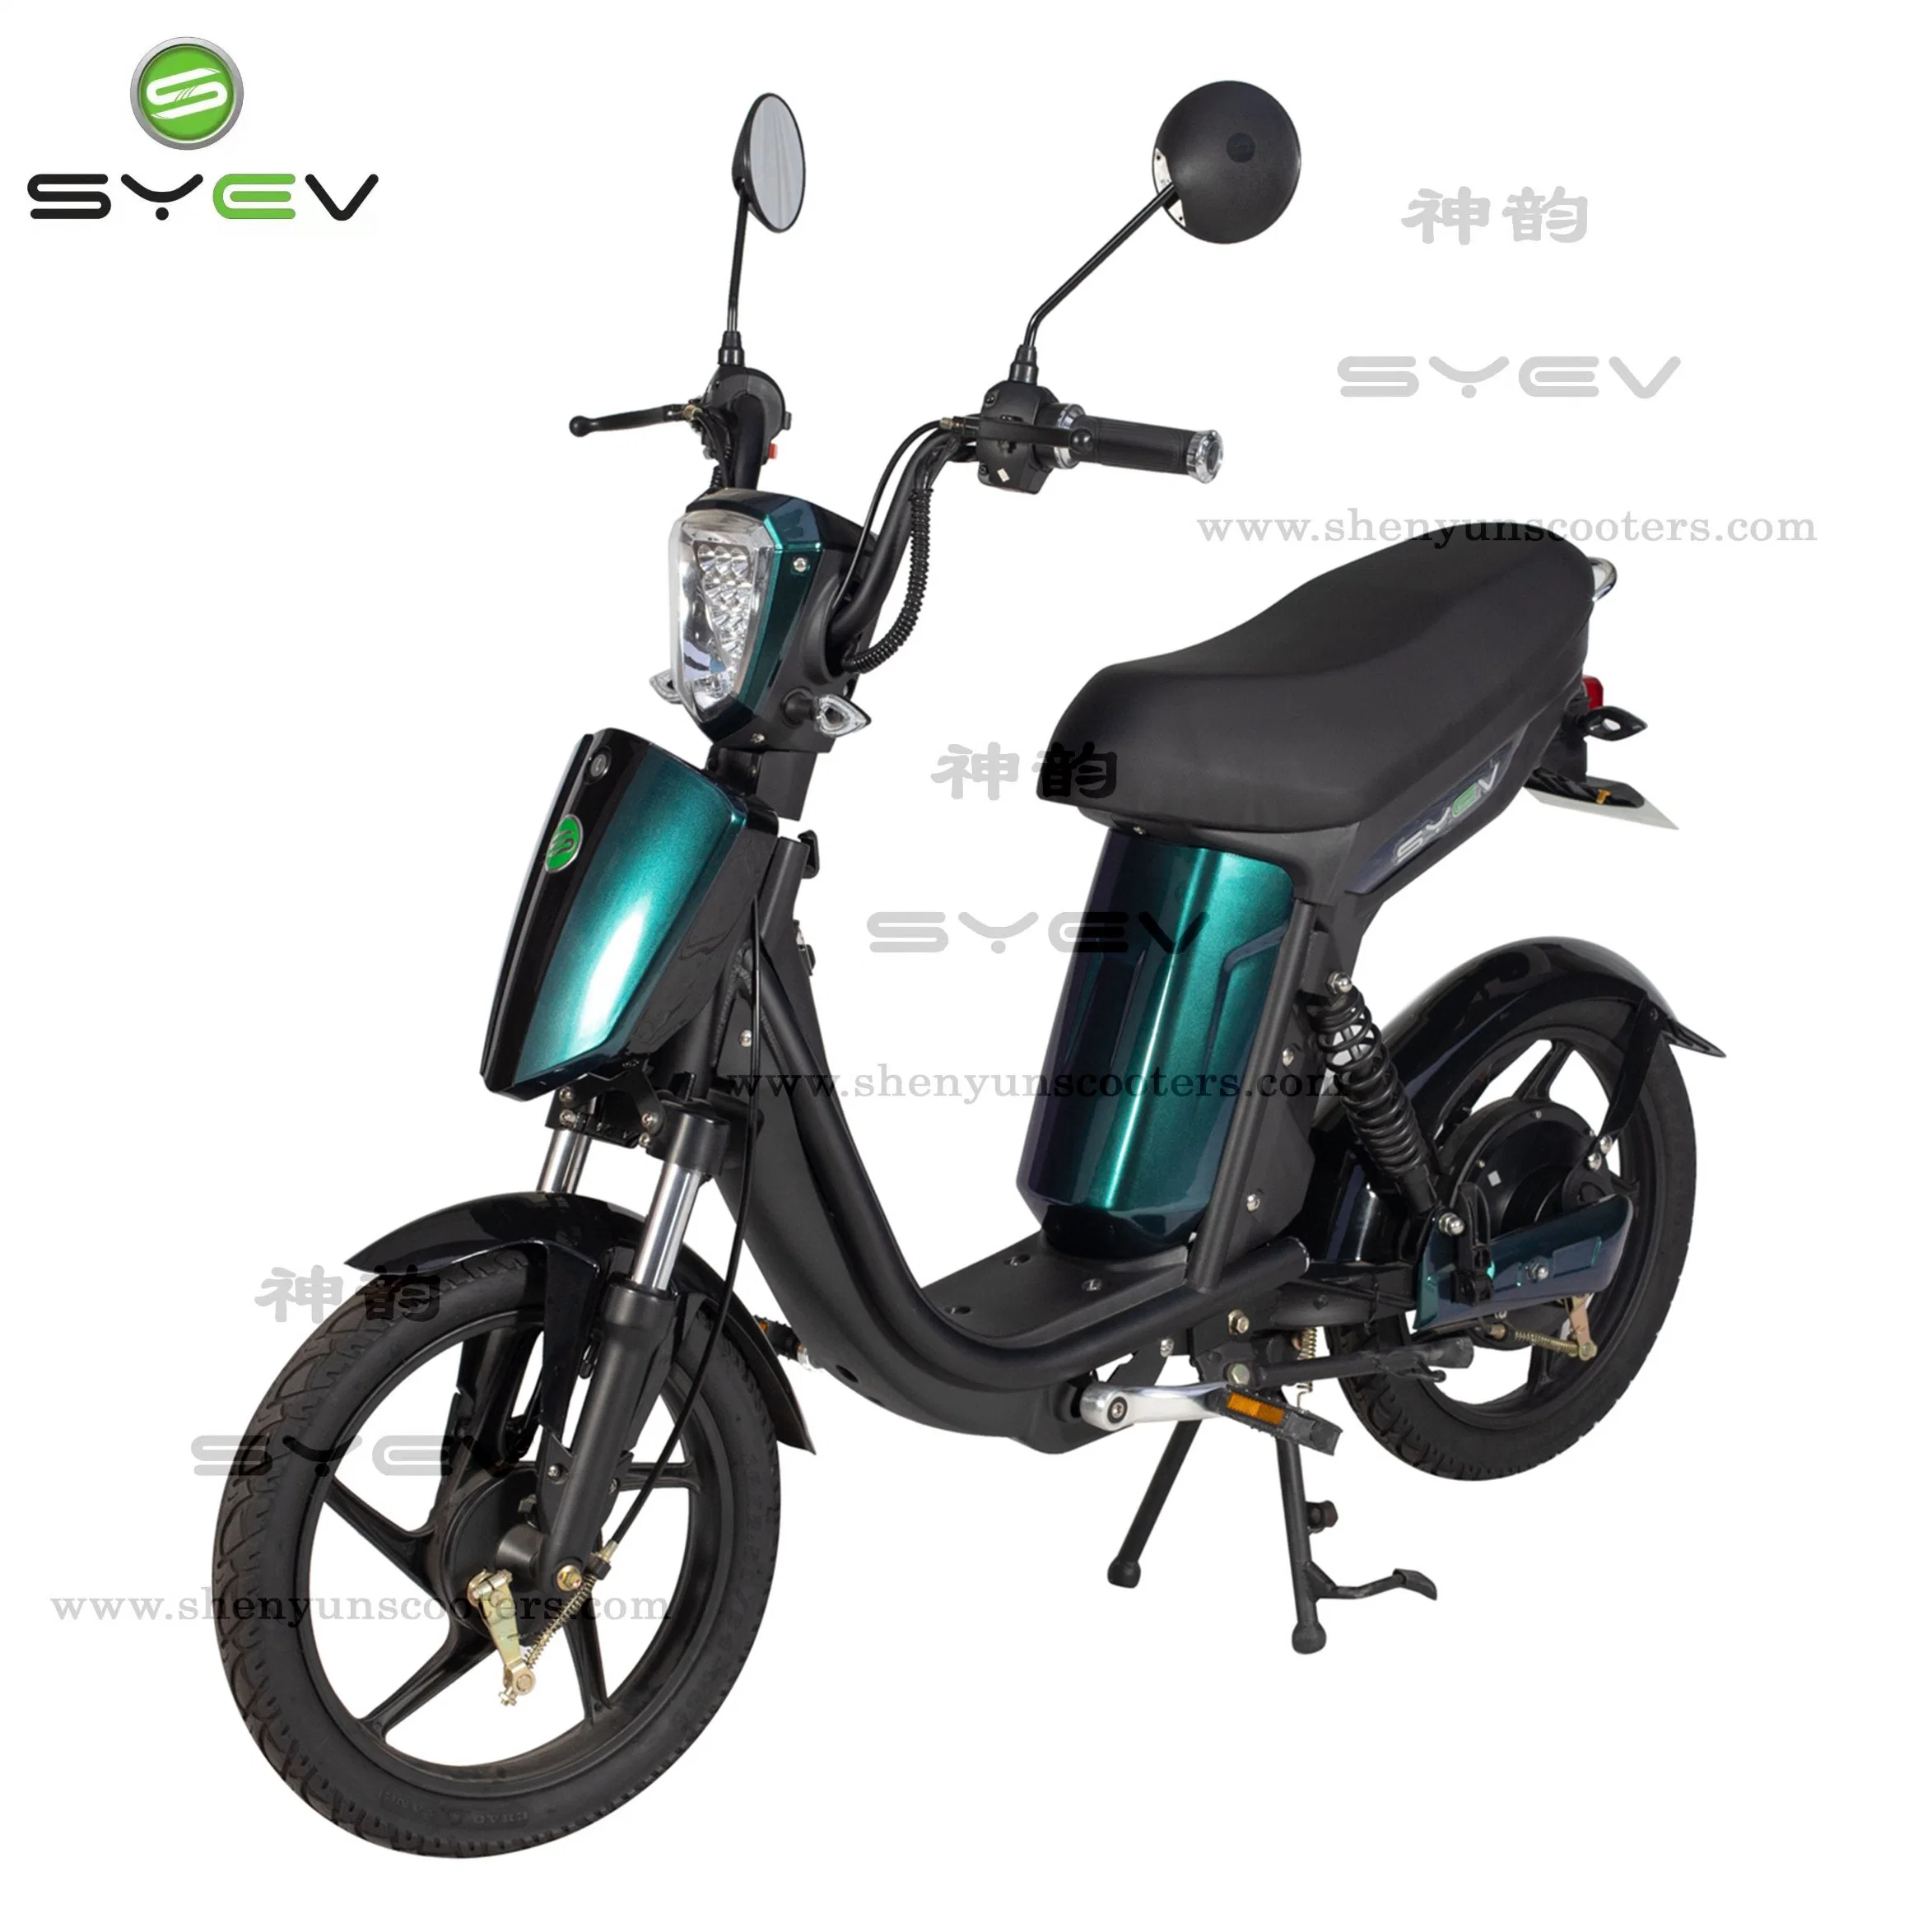 Scooter eléctrico Syev fuerte resistencia de los neumáticos de 18" bicicleta eléctrica motocicleta eléctrica 350W/500W motor CC